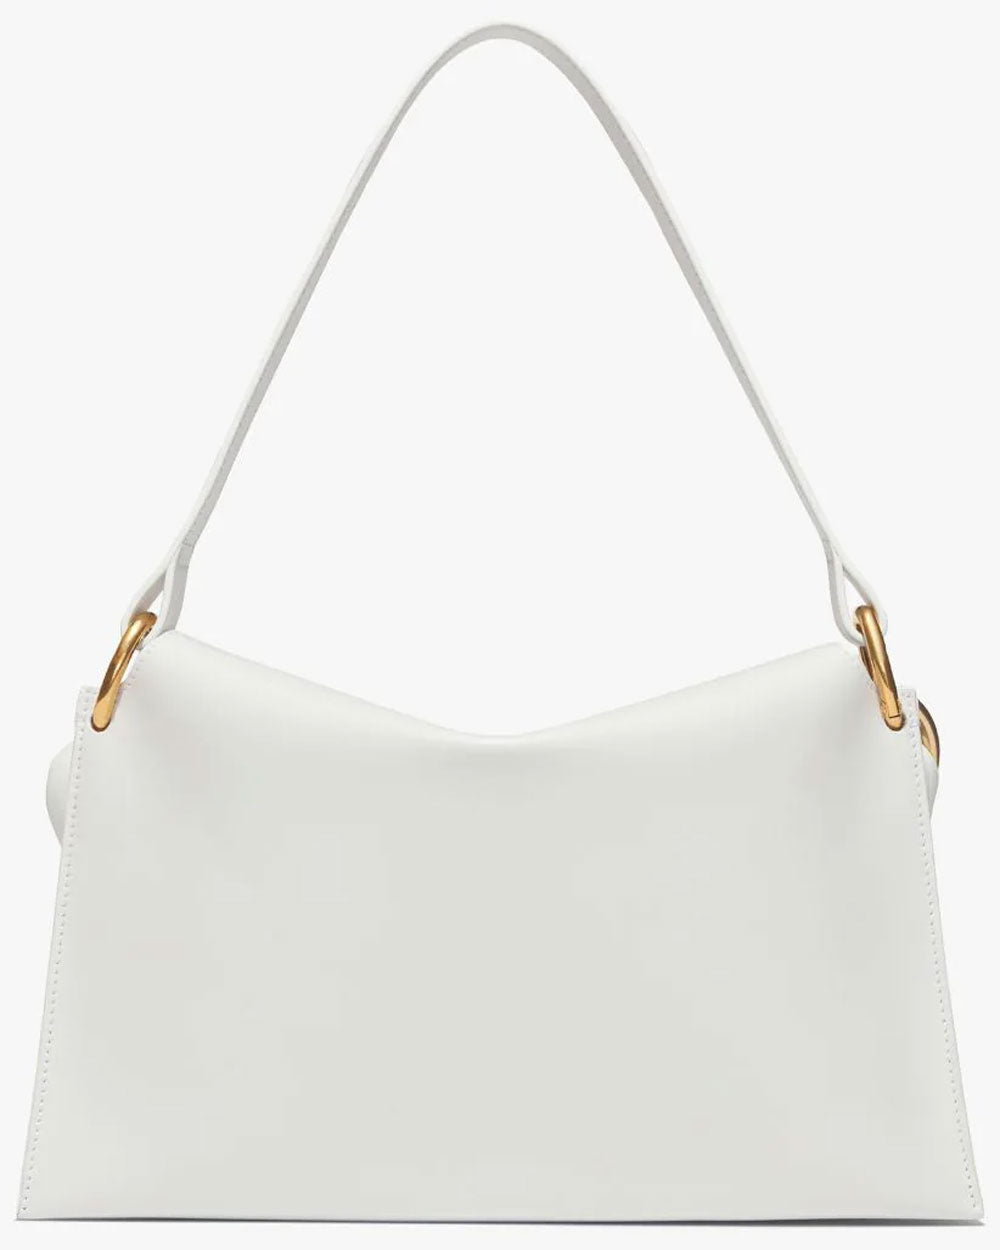 Braided Chain Shoulder Bag in Optic White